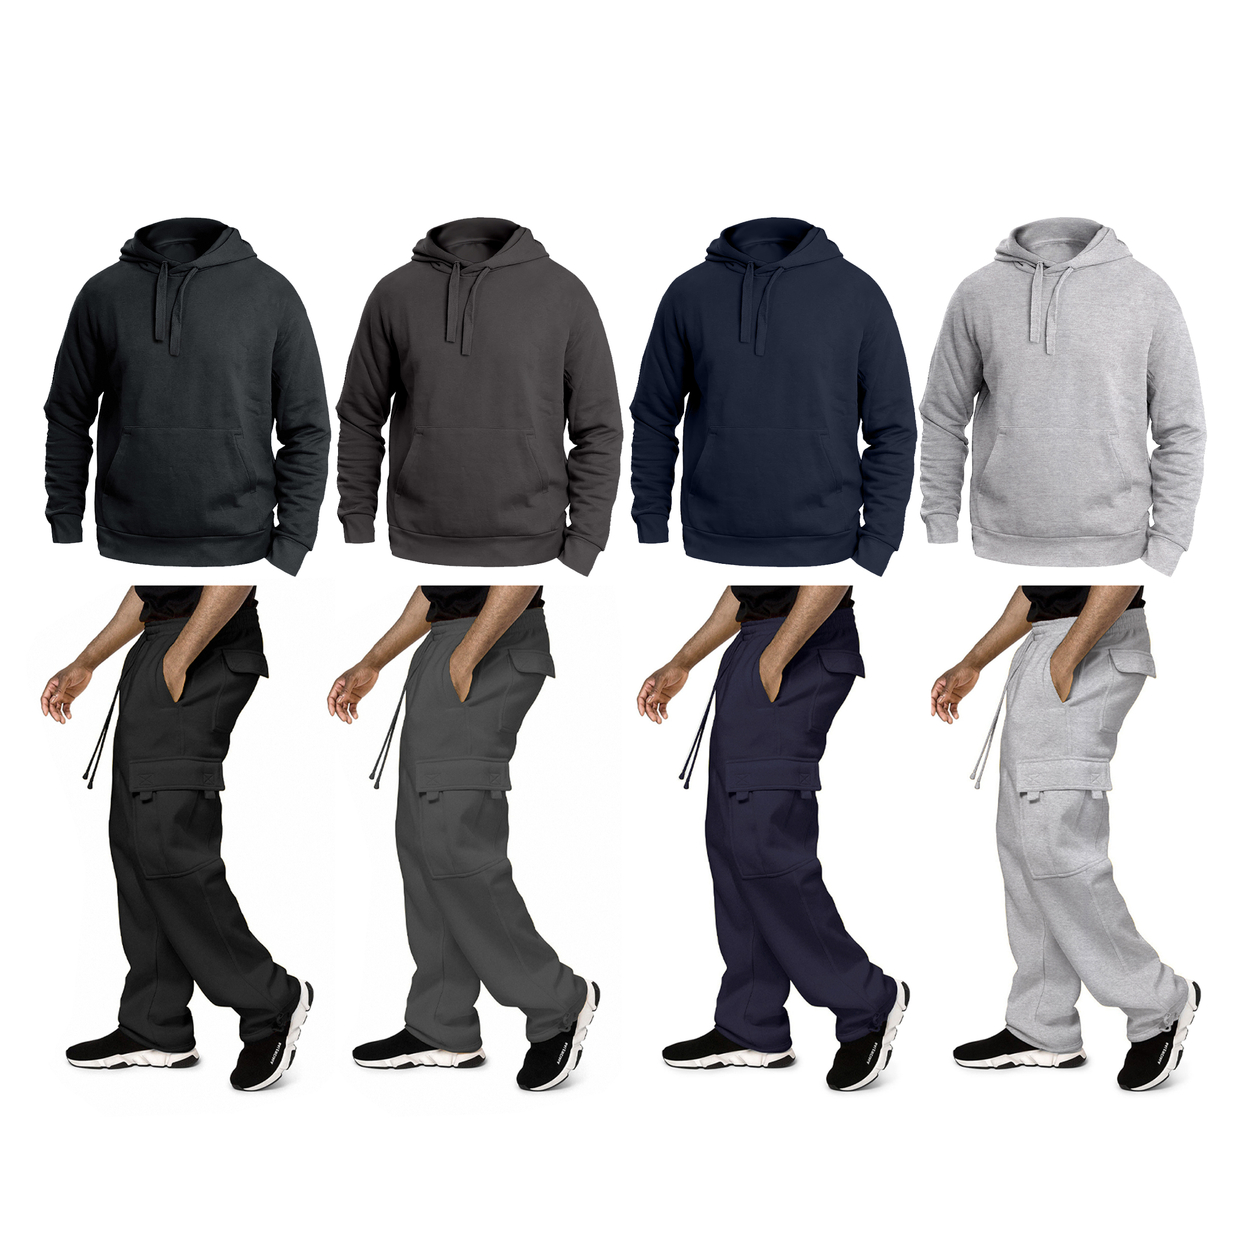 Men's Big & Tall Winter Warm Cozy Athletic Fleece Lined Multi-Pocket Cargo Sweatsuit - Navy, Medium